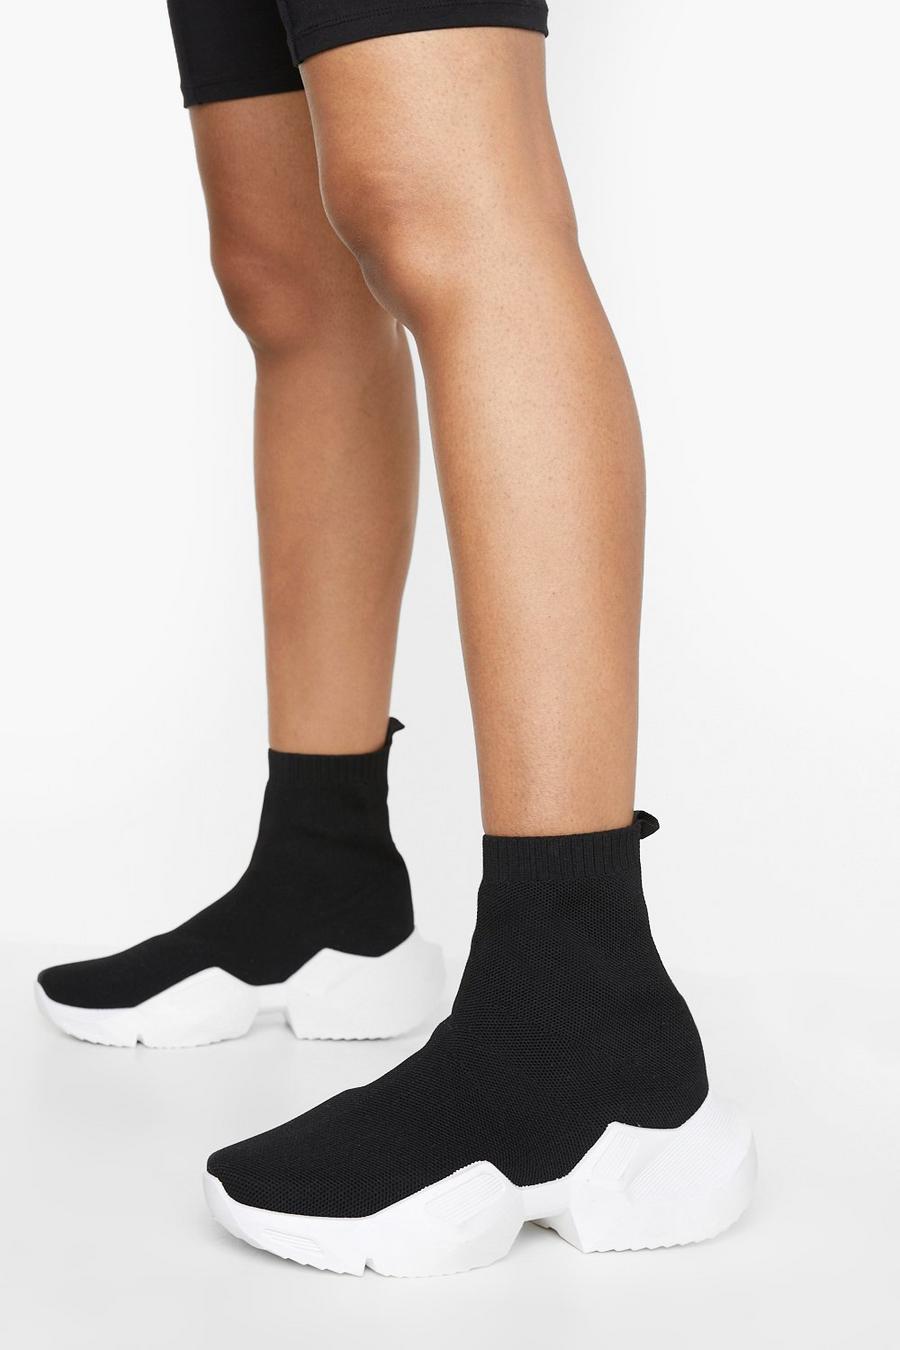 Socken-Sneaker mit klobiger Sohle, Black schwarz